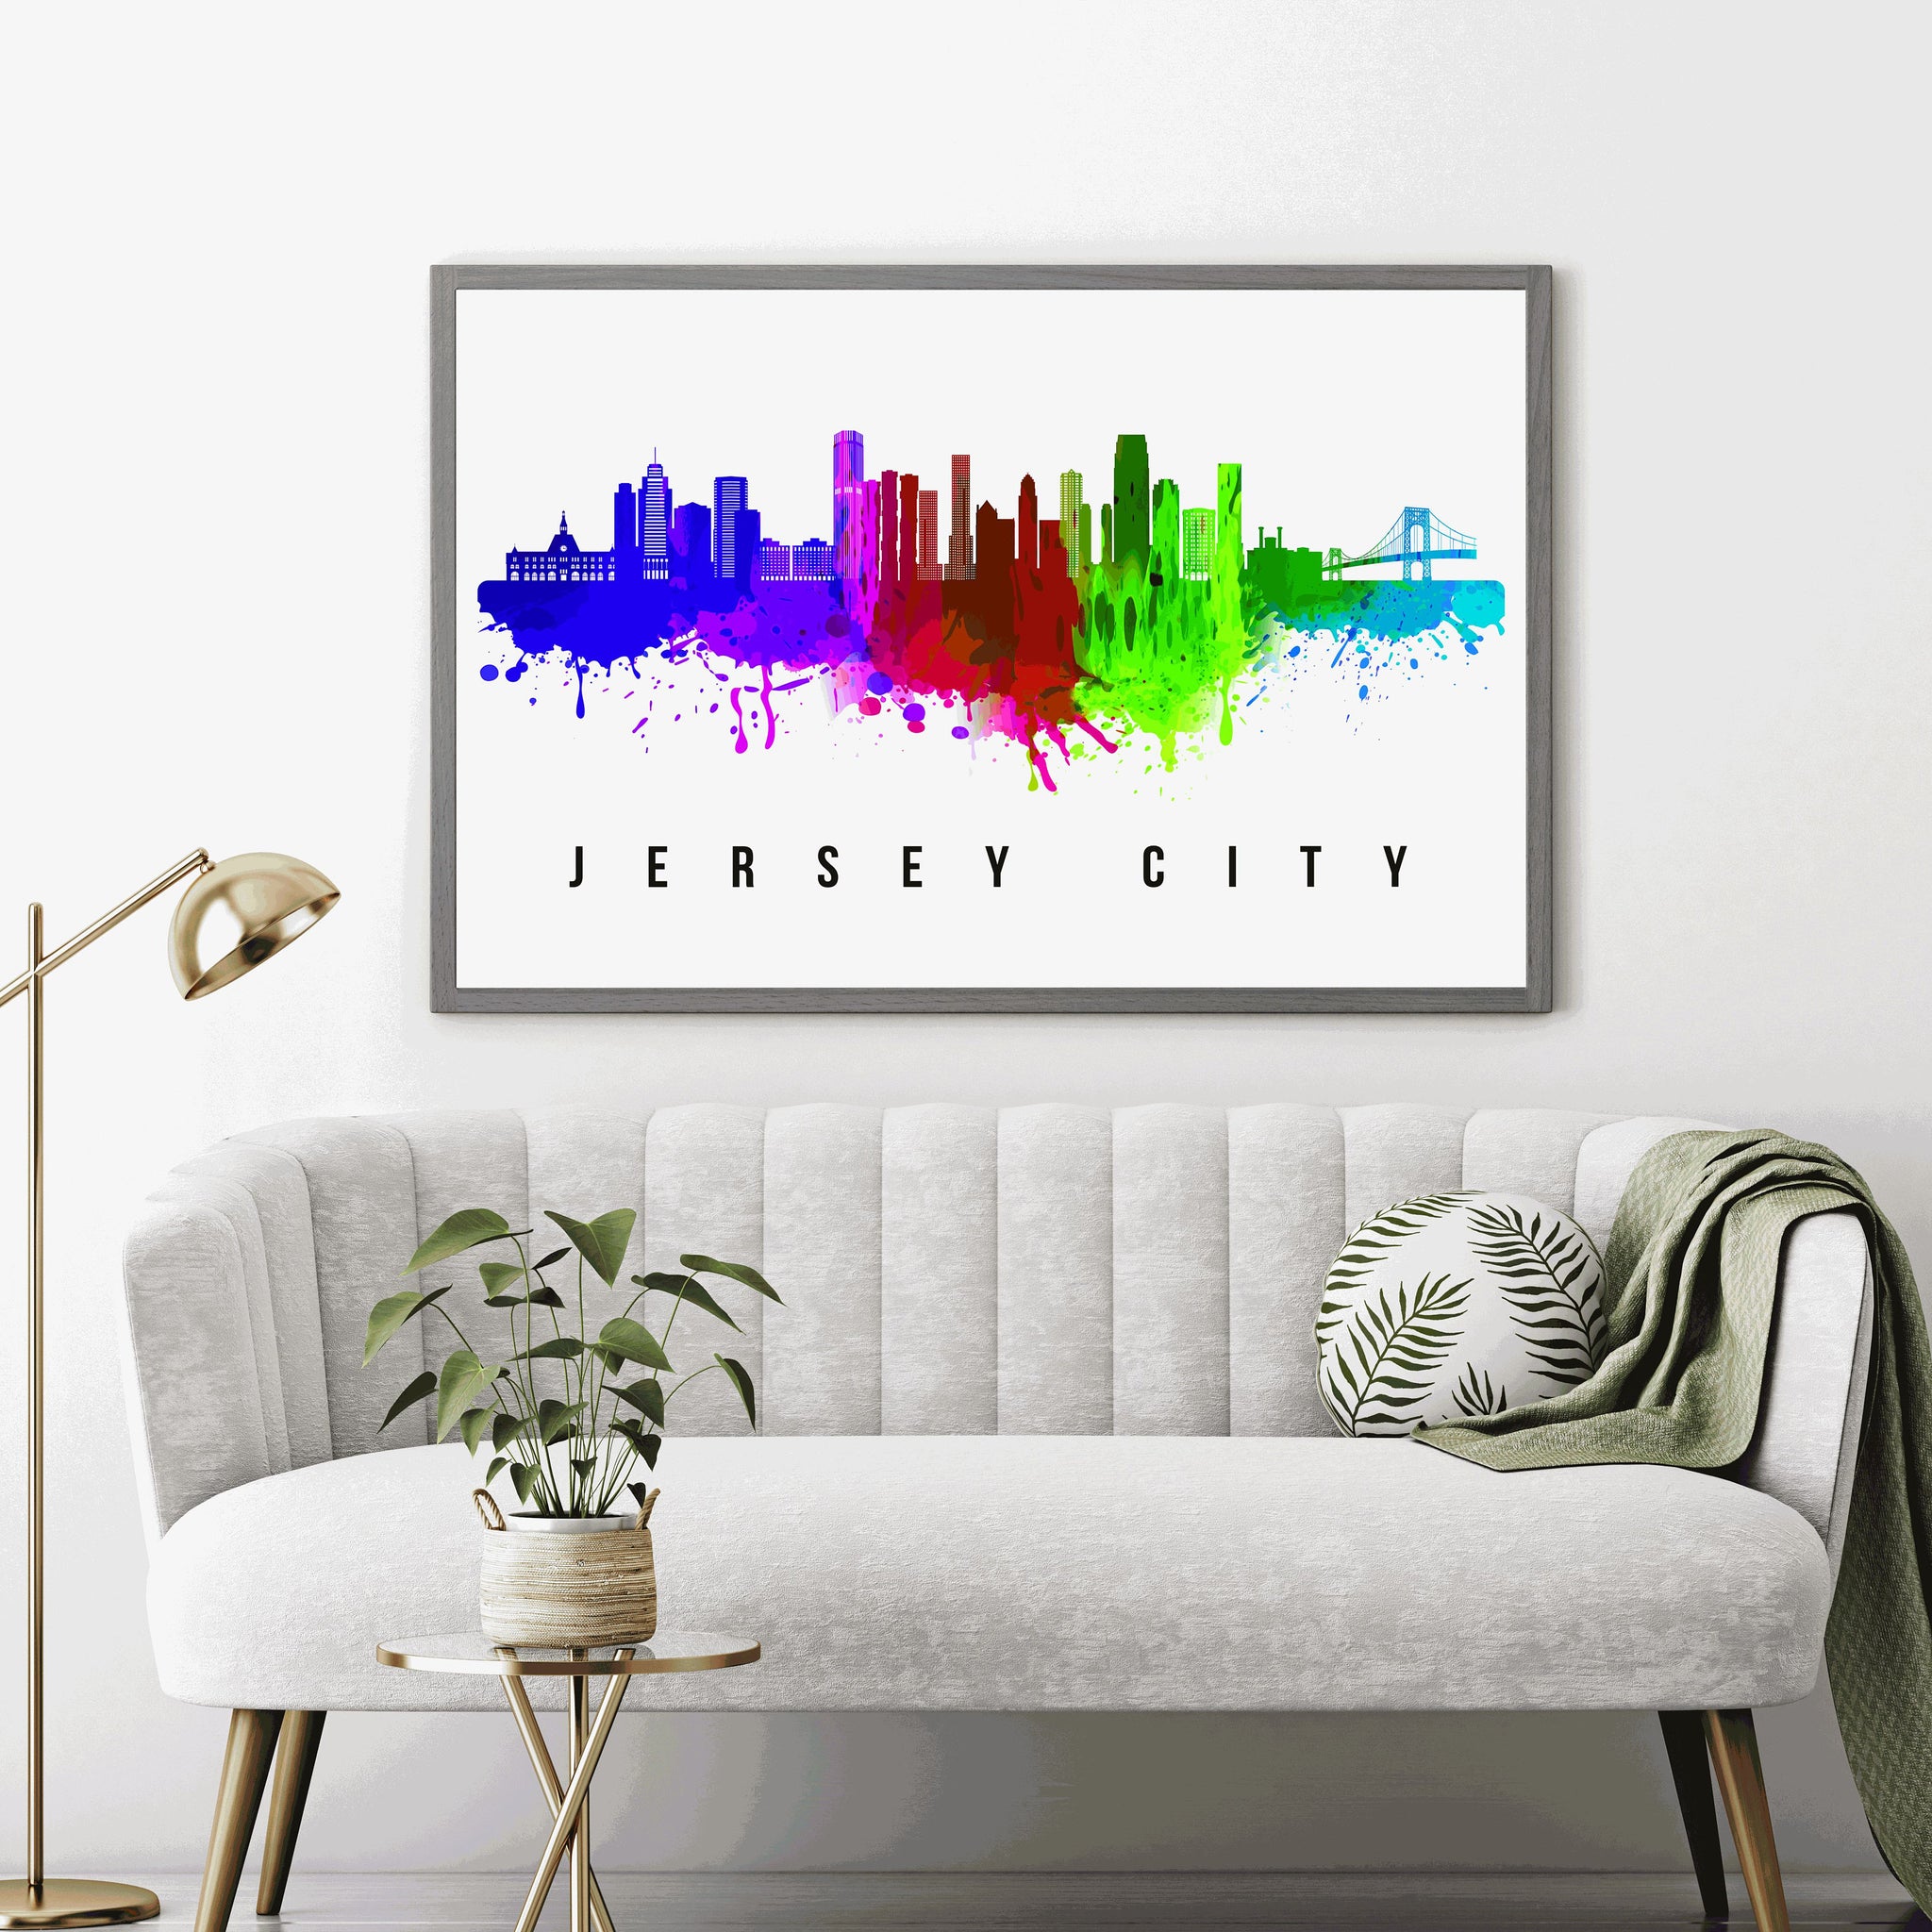 Jersey City Skyline New Jersey Poster, New Jersey Cityscape Painting, Jersey city New Jersey Poster, Cityscape and Landmark Print, Wall Art